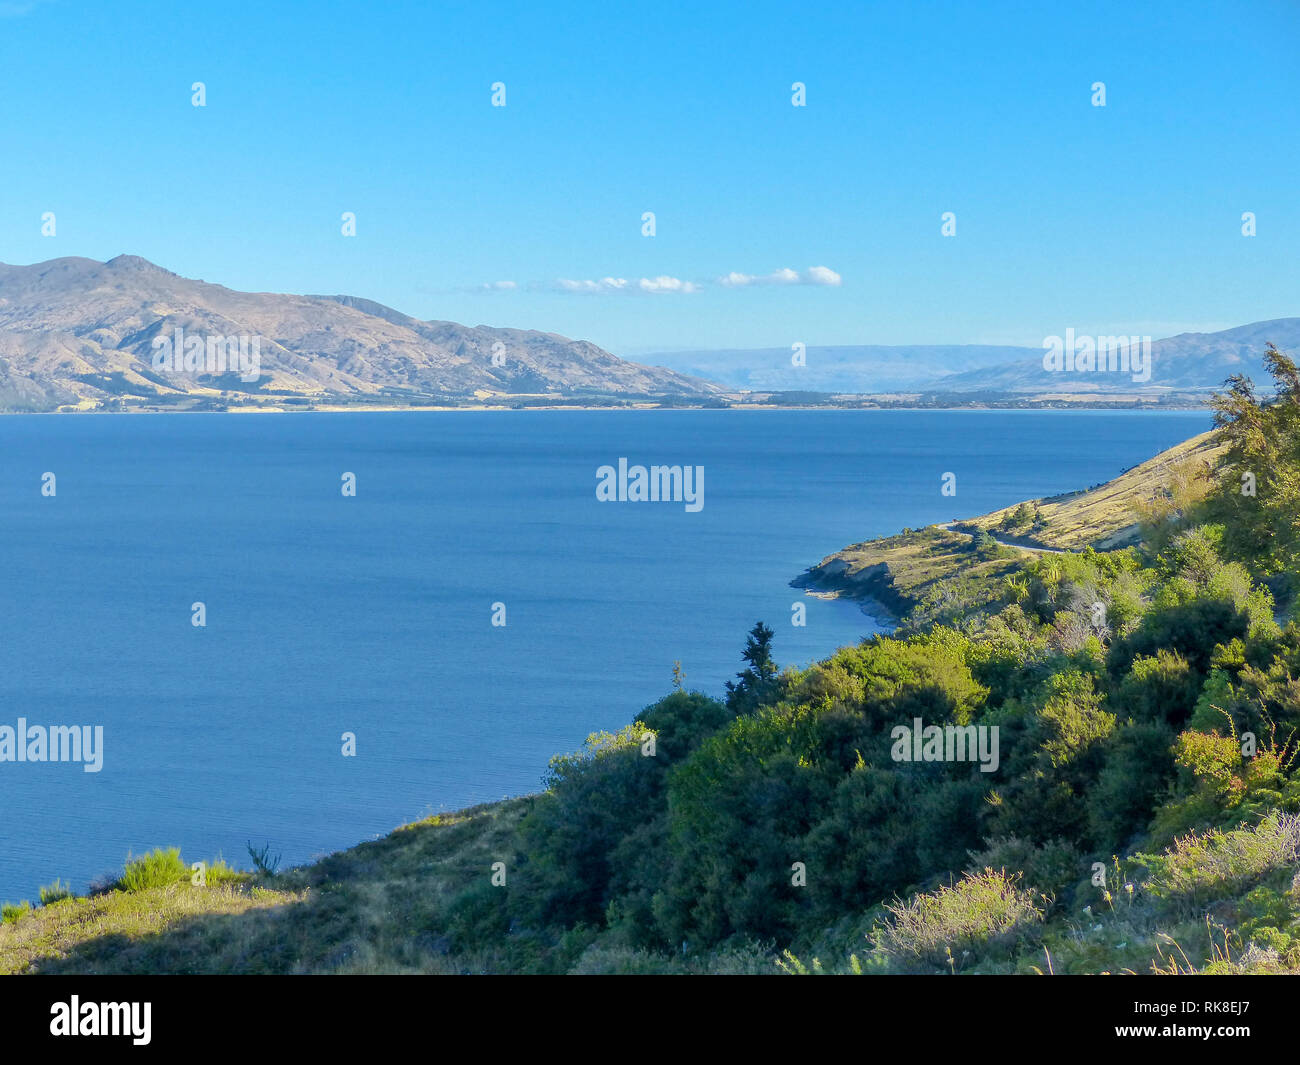 Landscape and Seascape near North Island, New Zealand Stock Photo